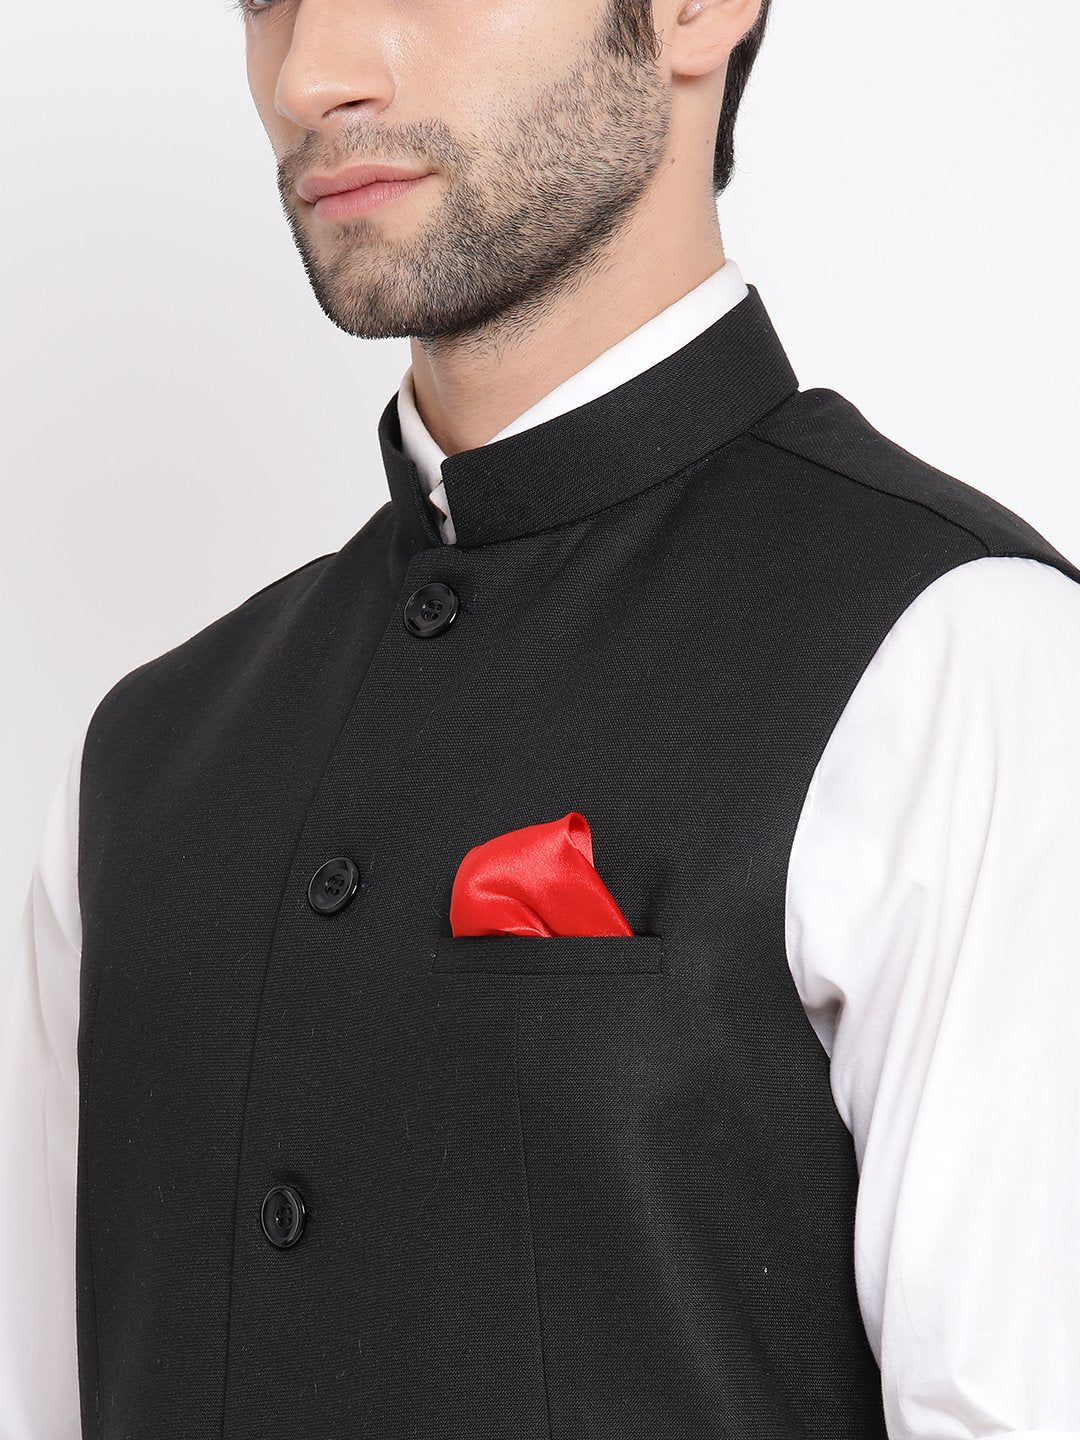 Men's Black Cotton Silk Blend Nehru Jacket - Final Clearance Sale